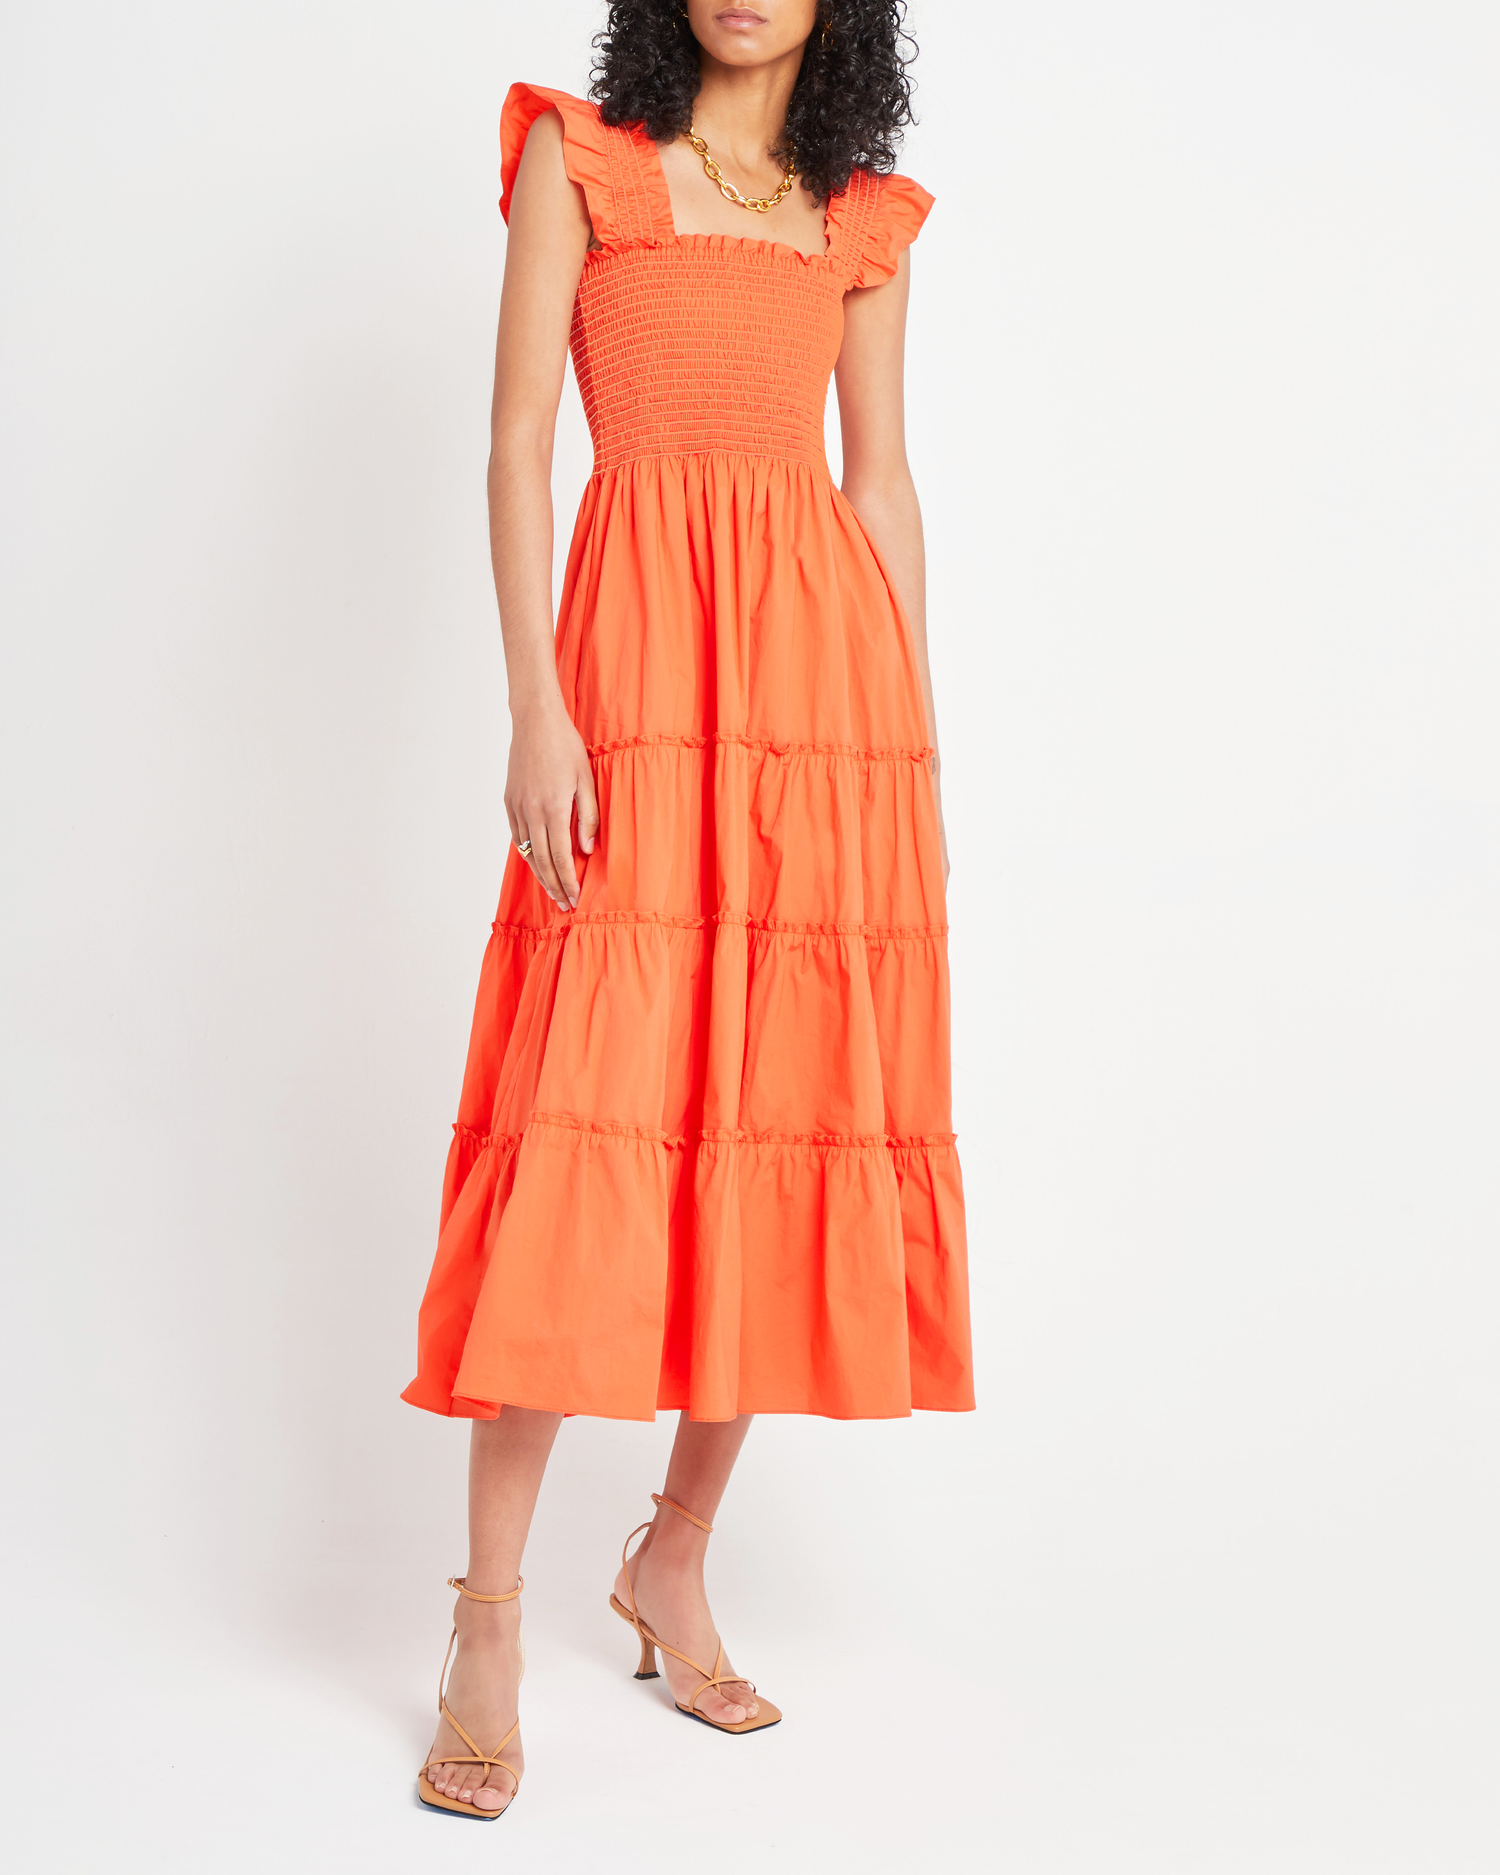 First image of Calypso Maxi Dress, a orange maxi dress,ruffle cap sleeves, smocked bodice